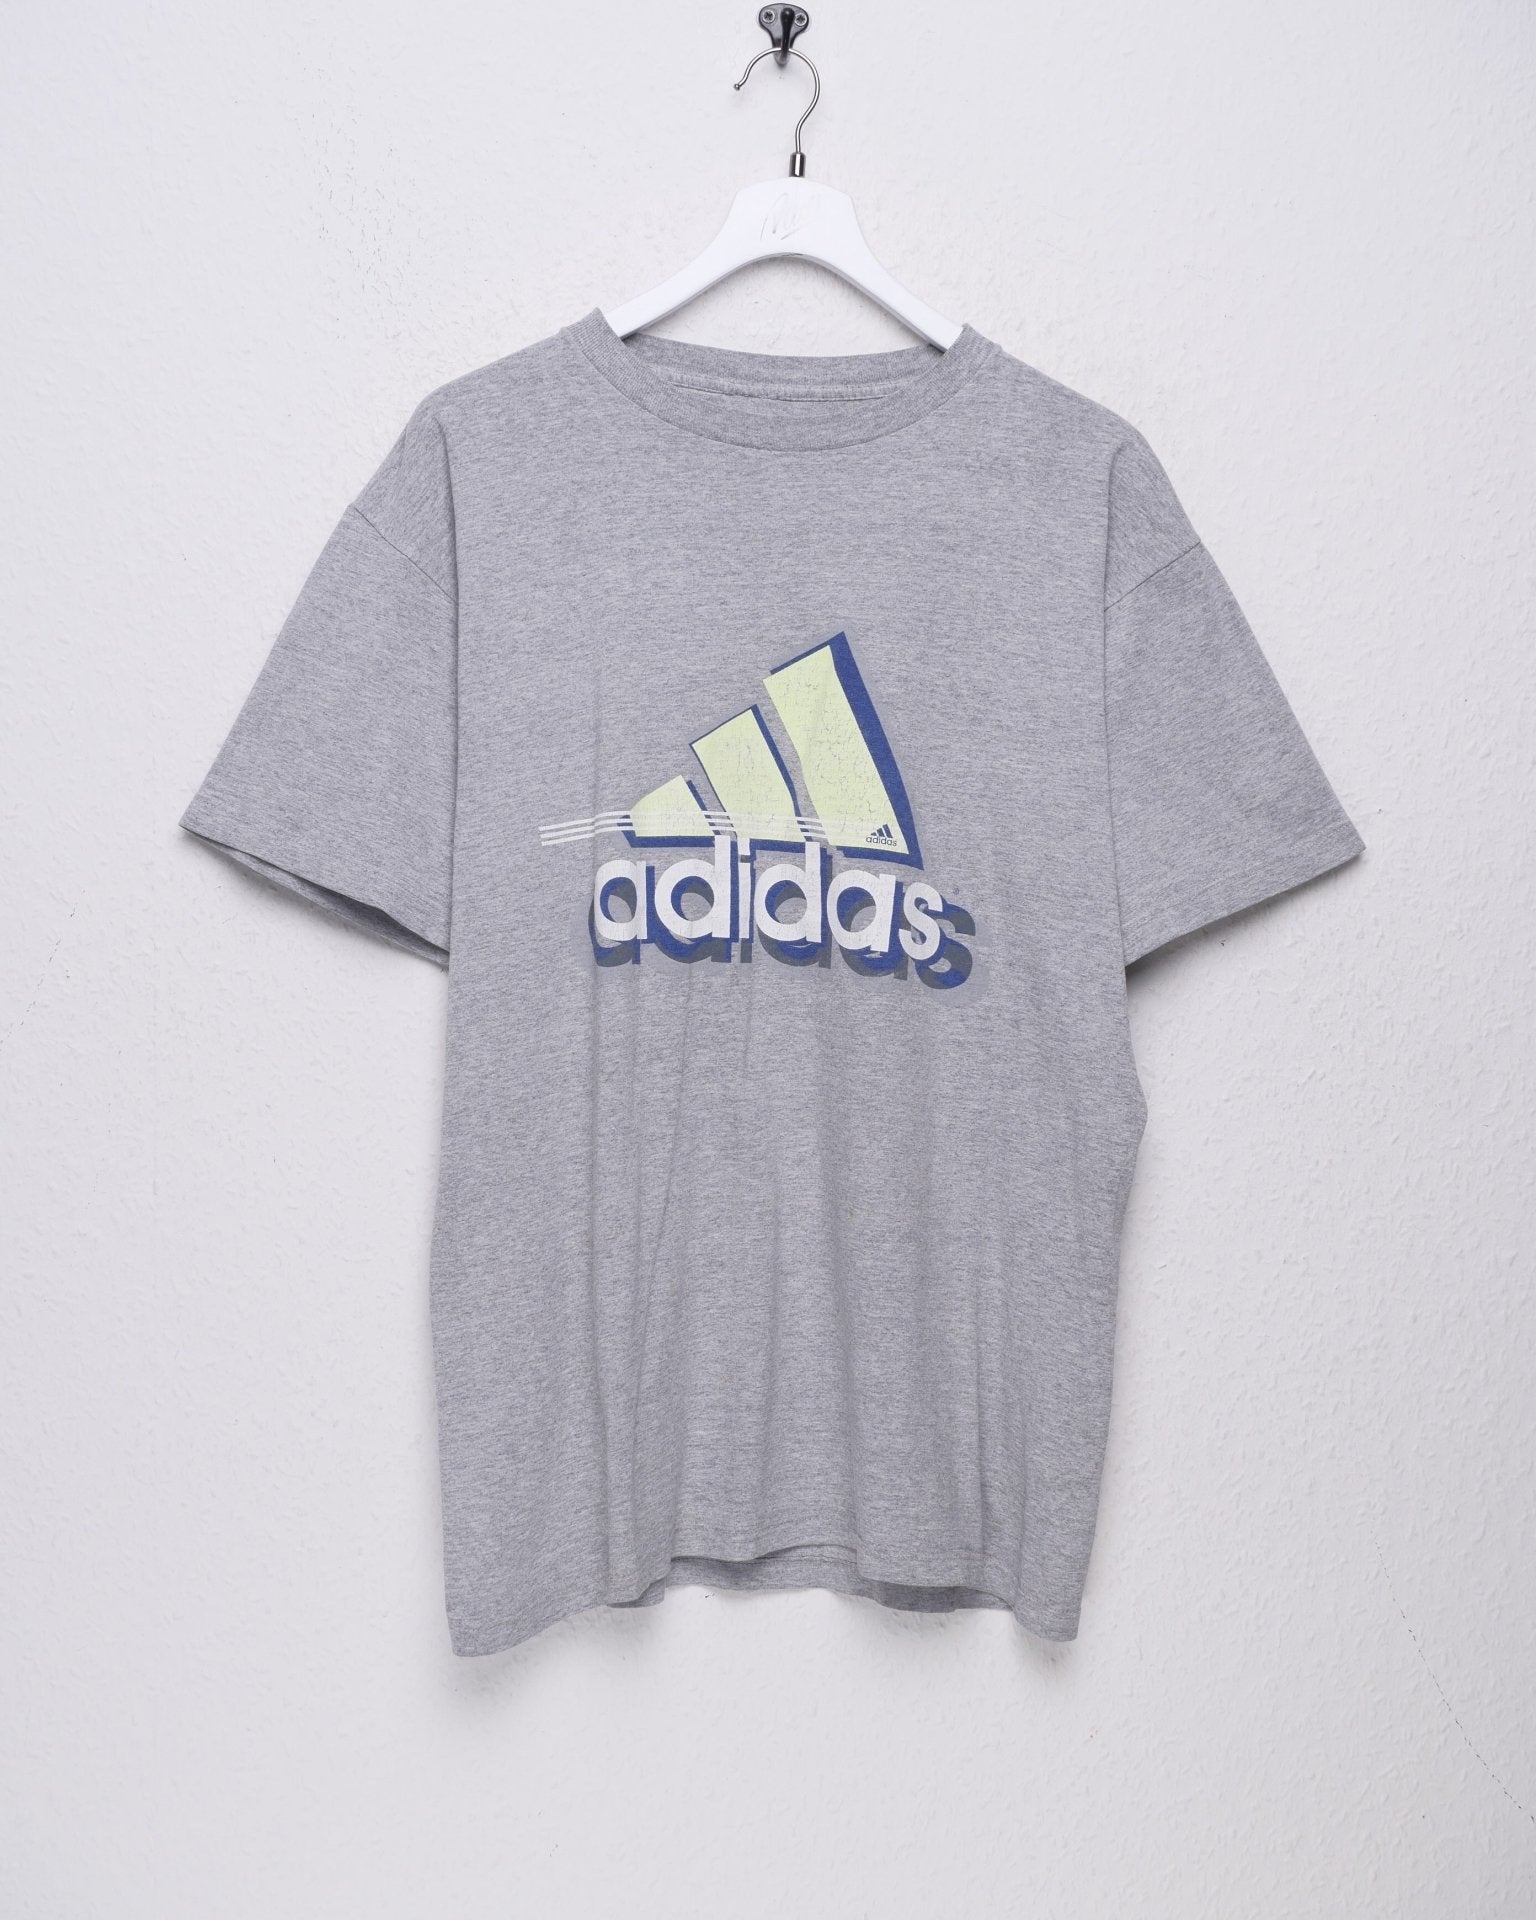 Adidas printed Logo Vintage Shirt - Peeces